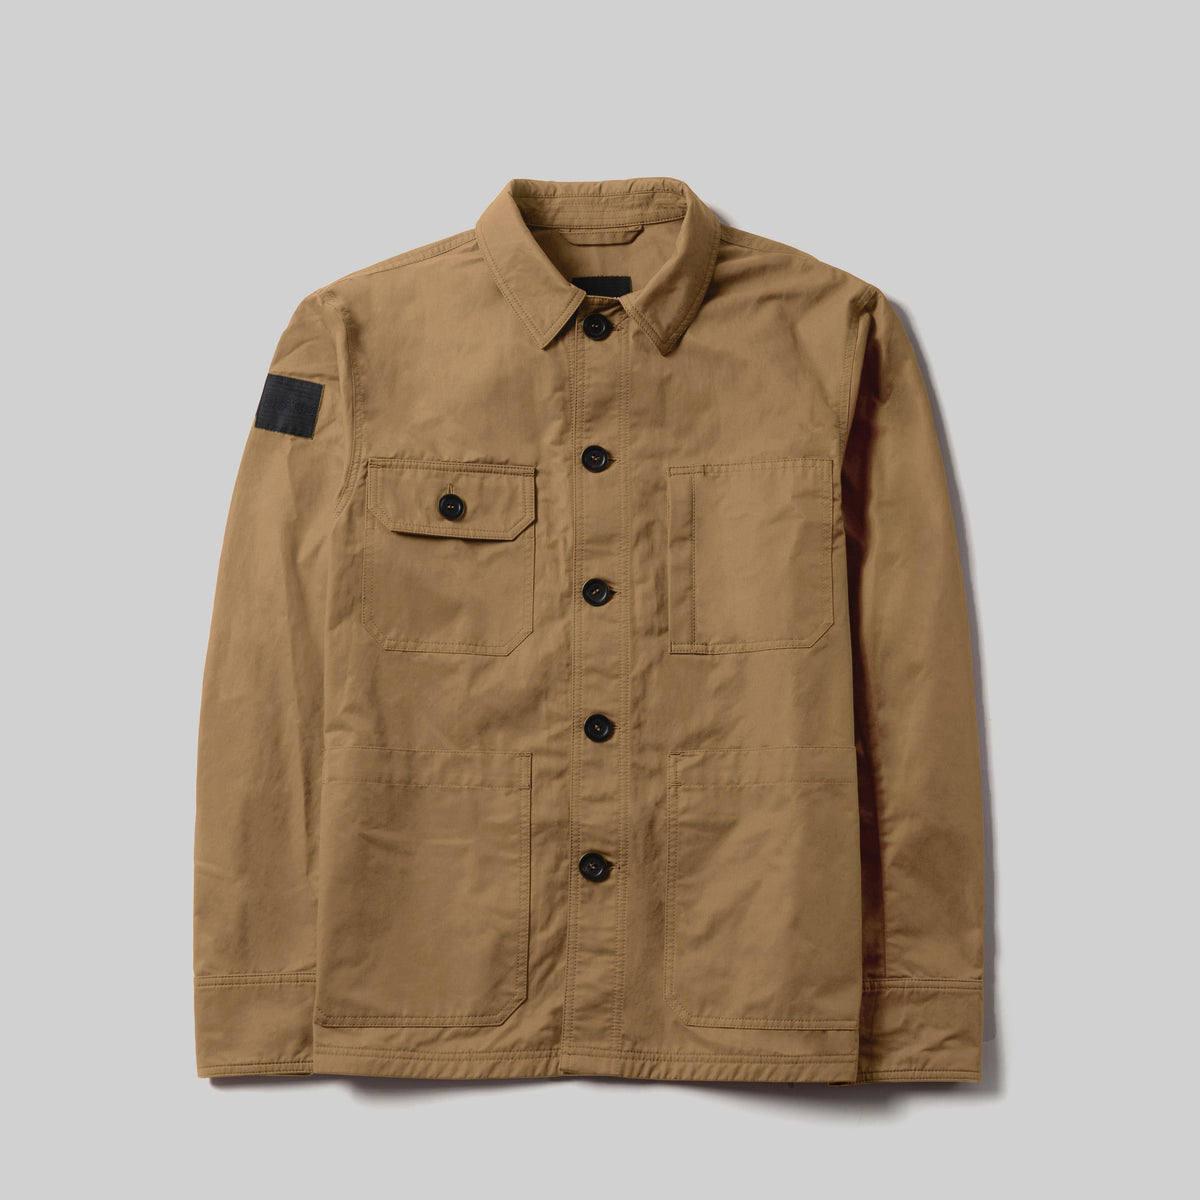 FRAHM Jacket Jacket S / Regular / Light Tan Original Lightweight Worker&#39;s Jacket